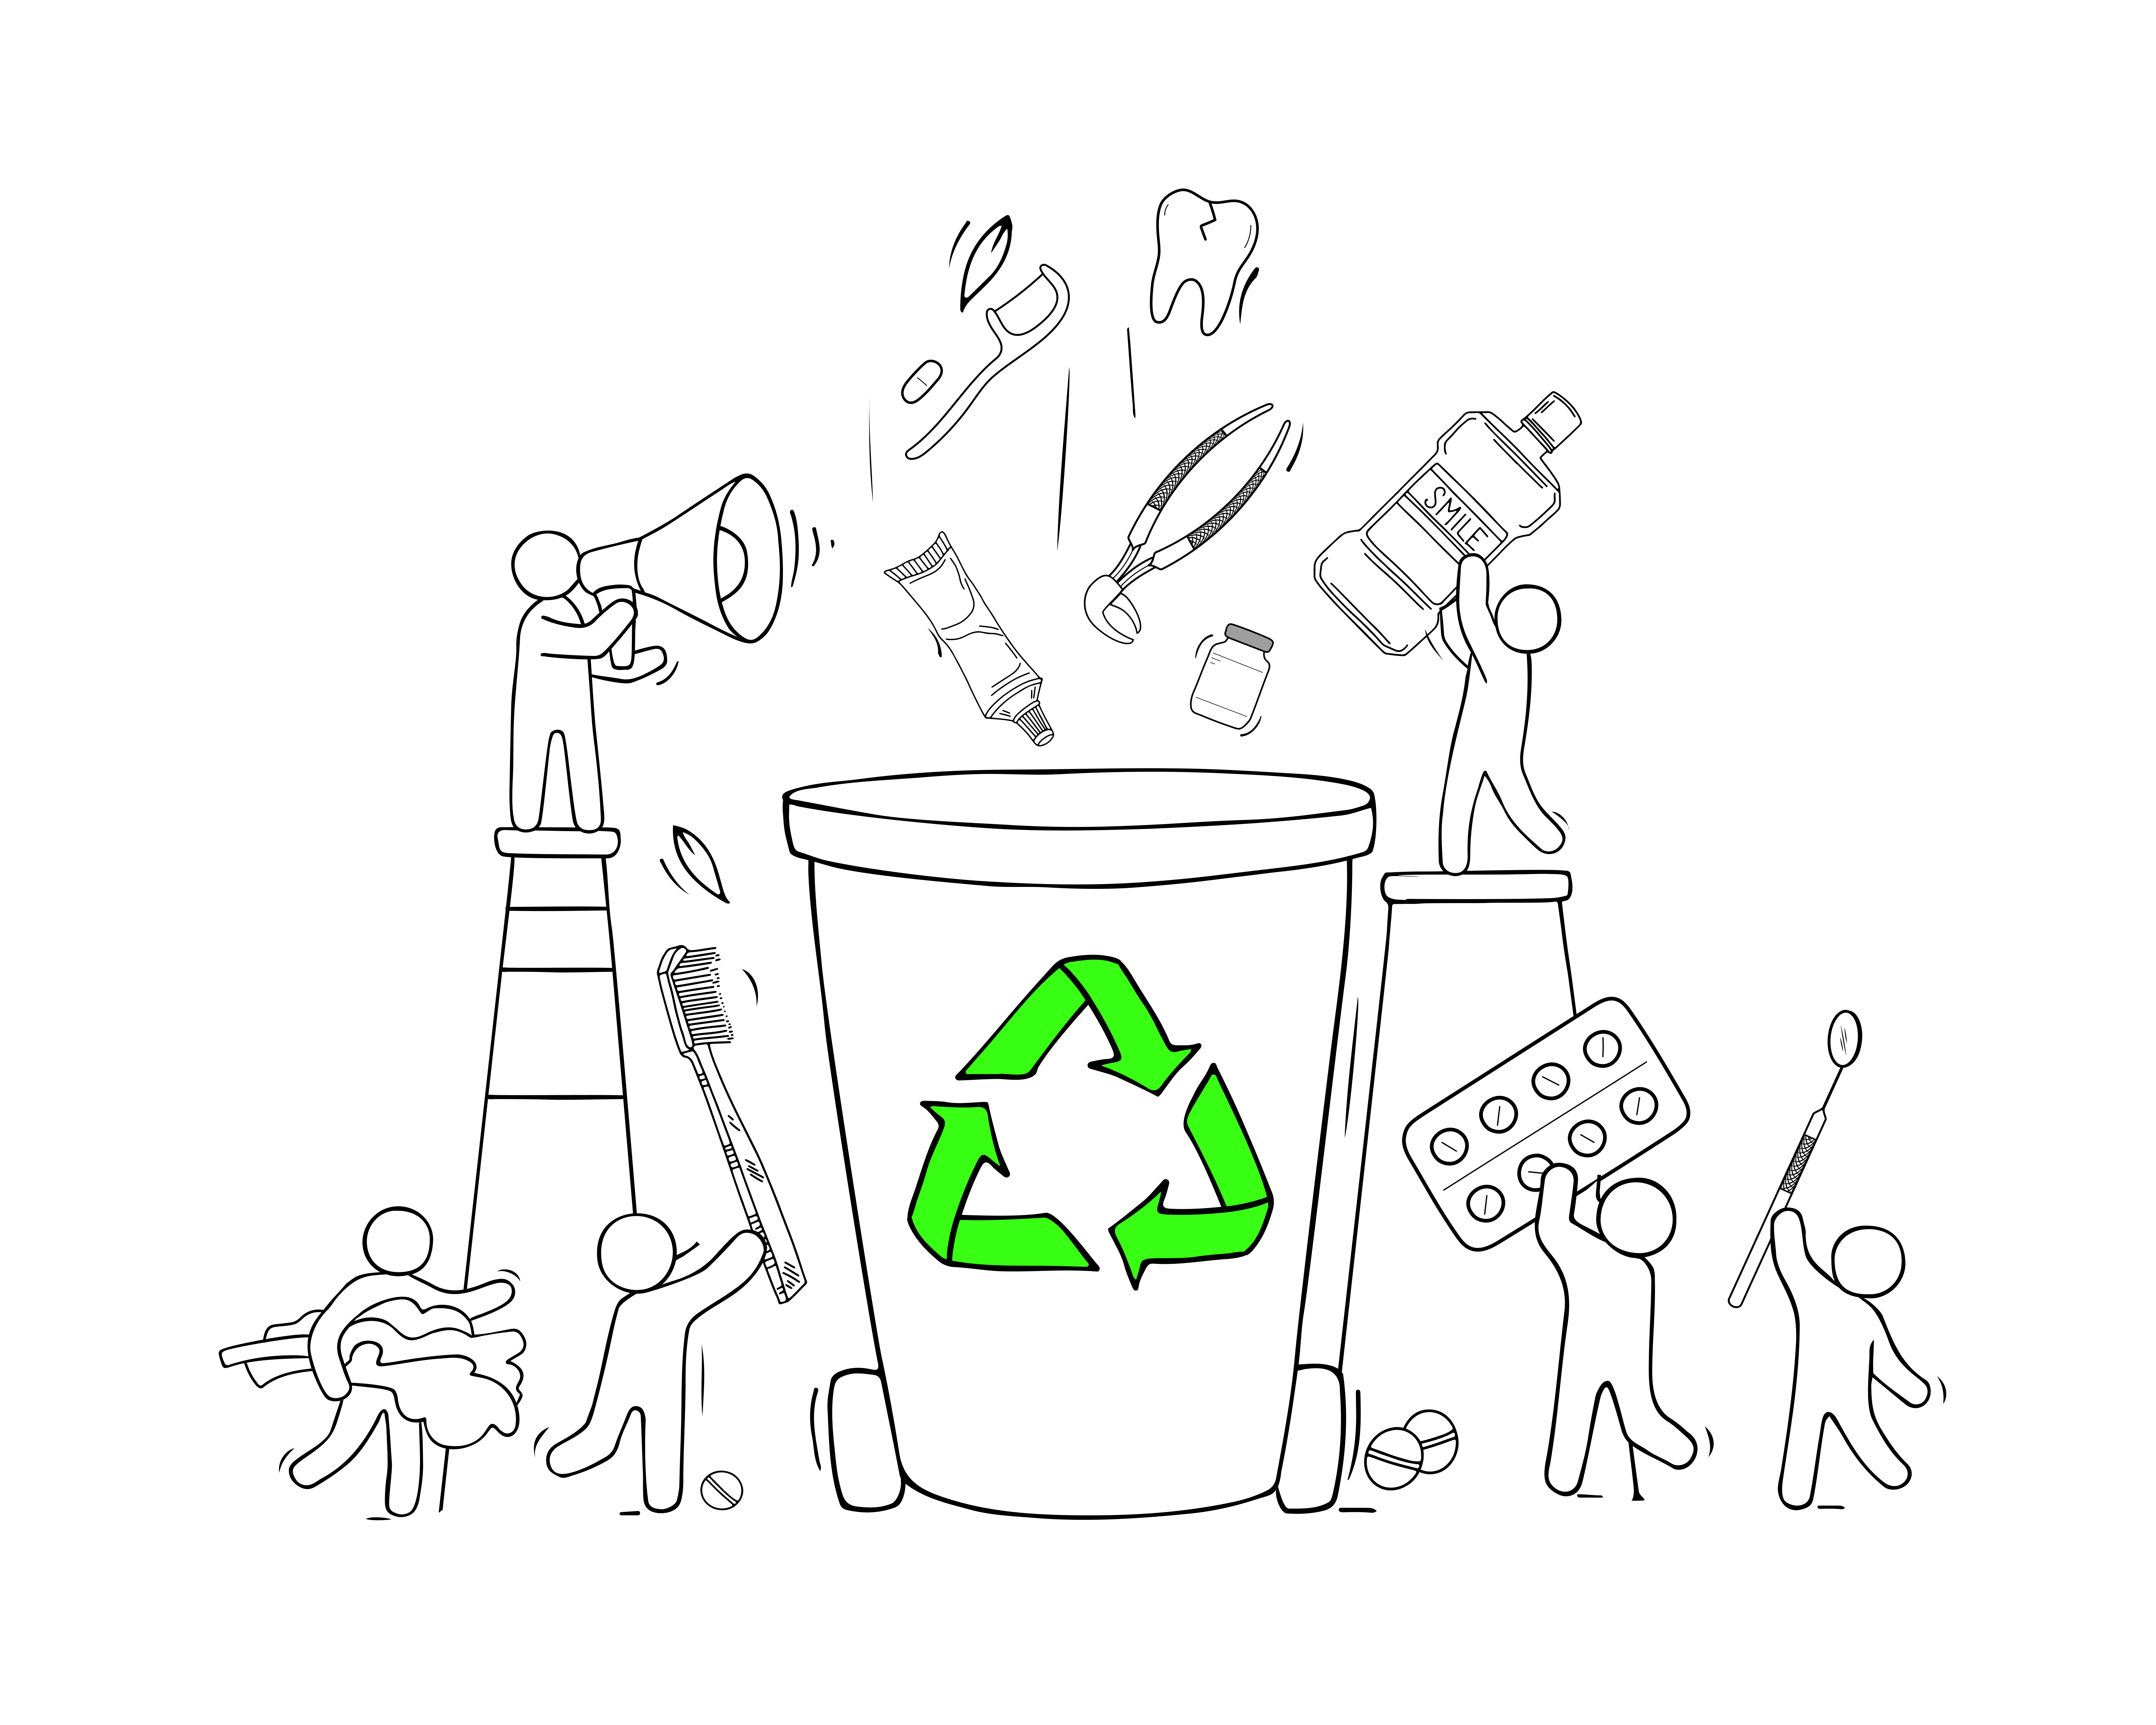 Reducing waste: Sustainable waste management strategies